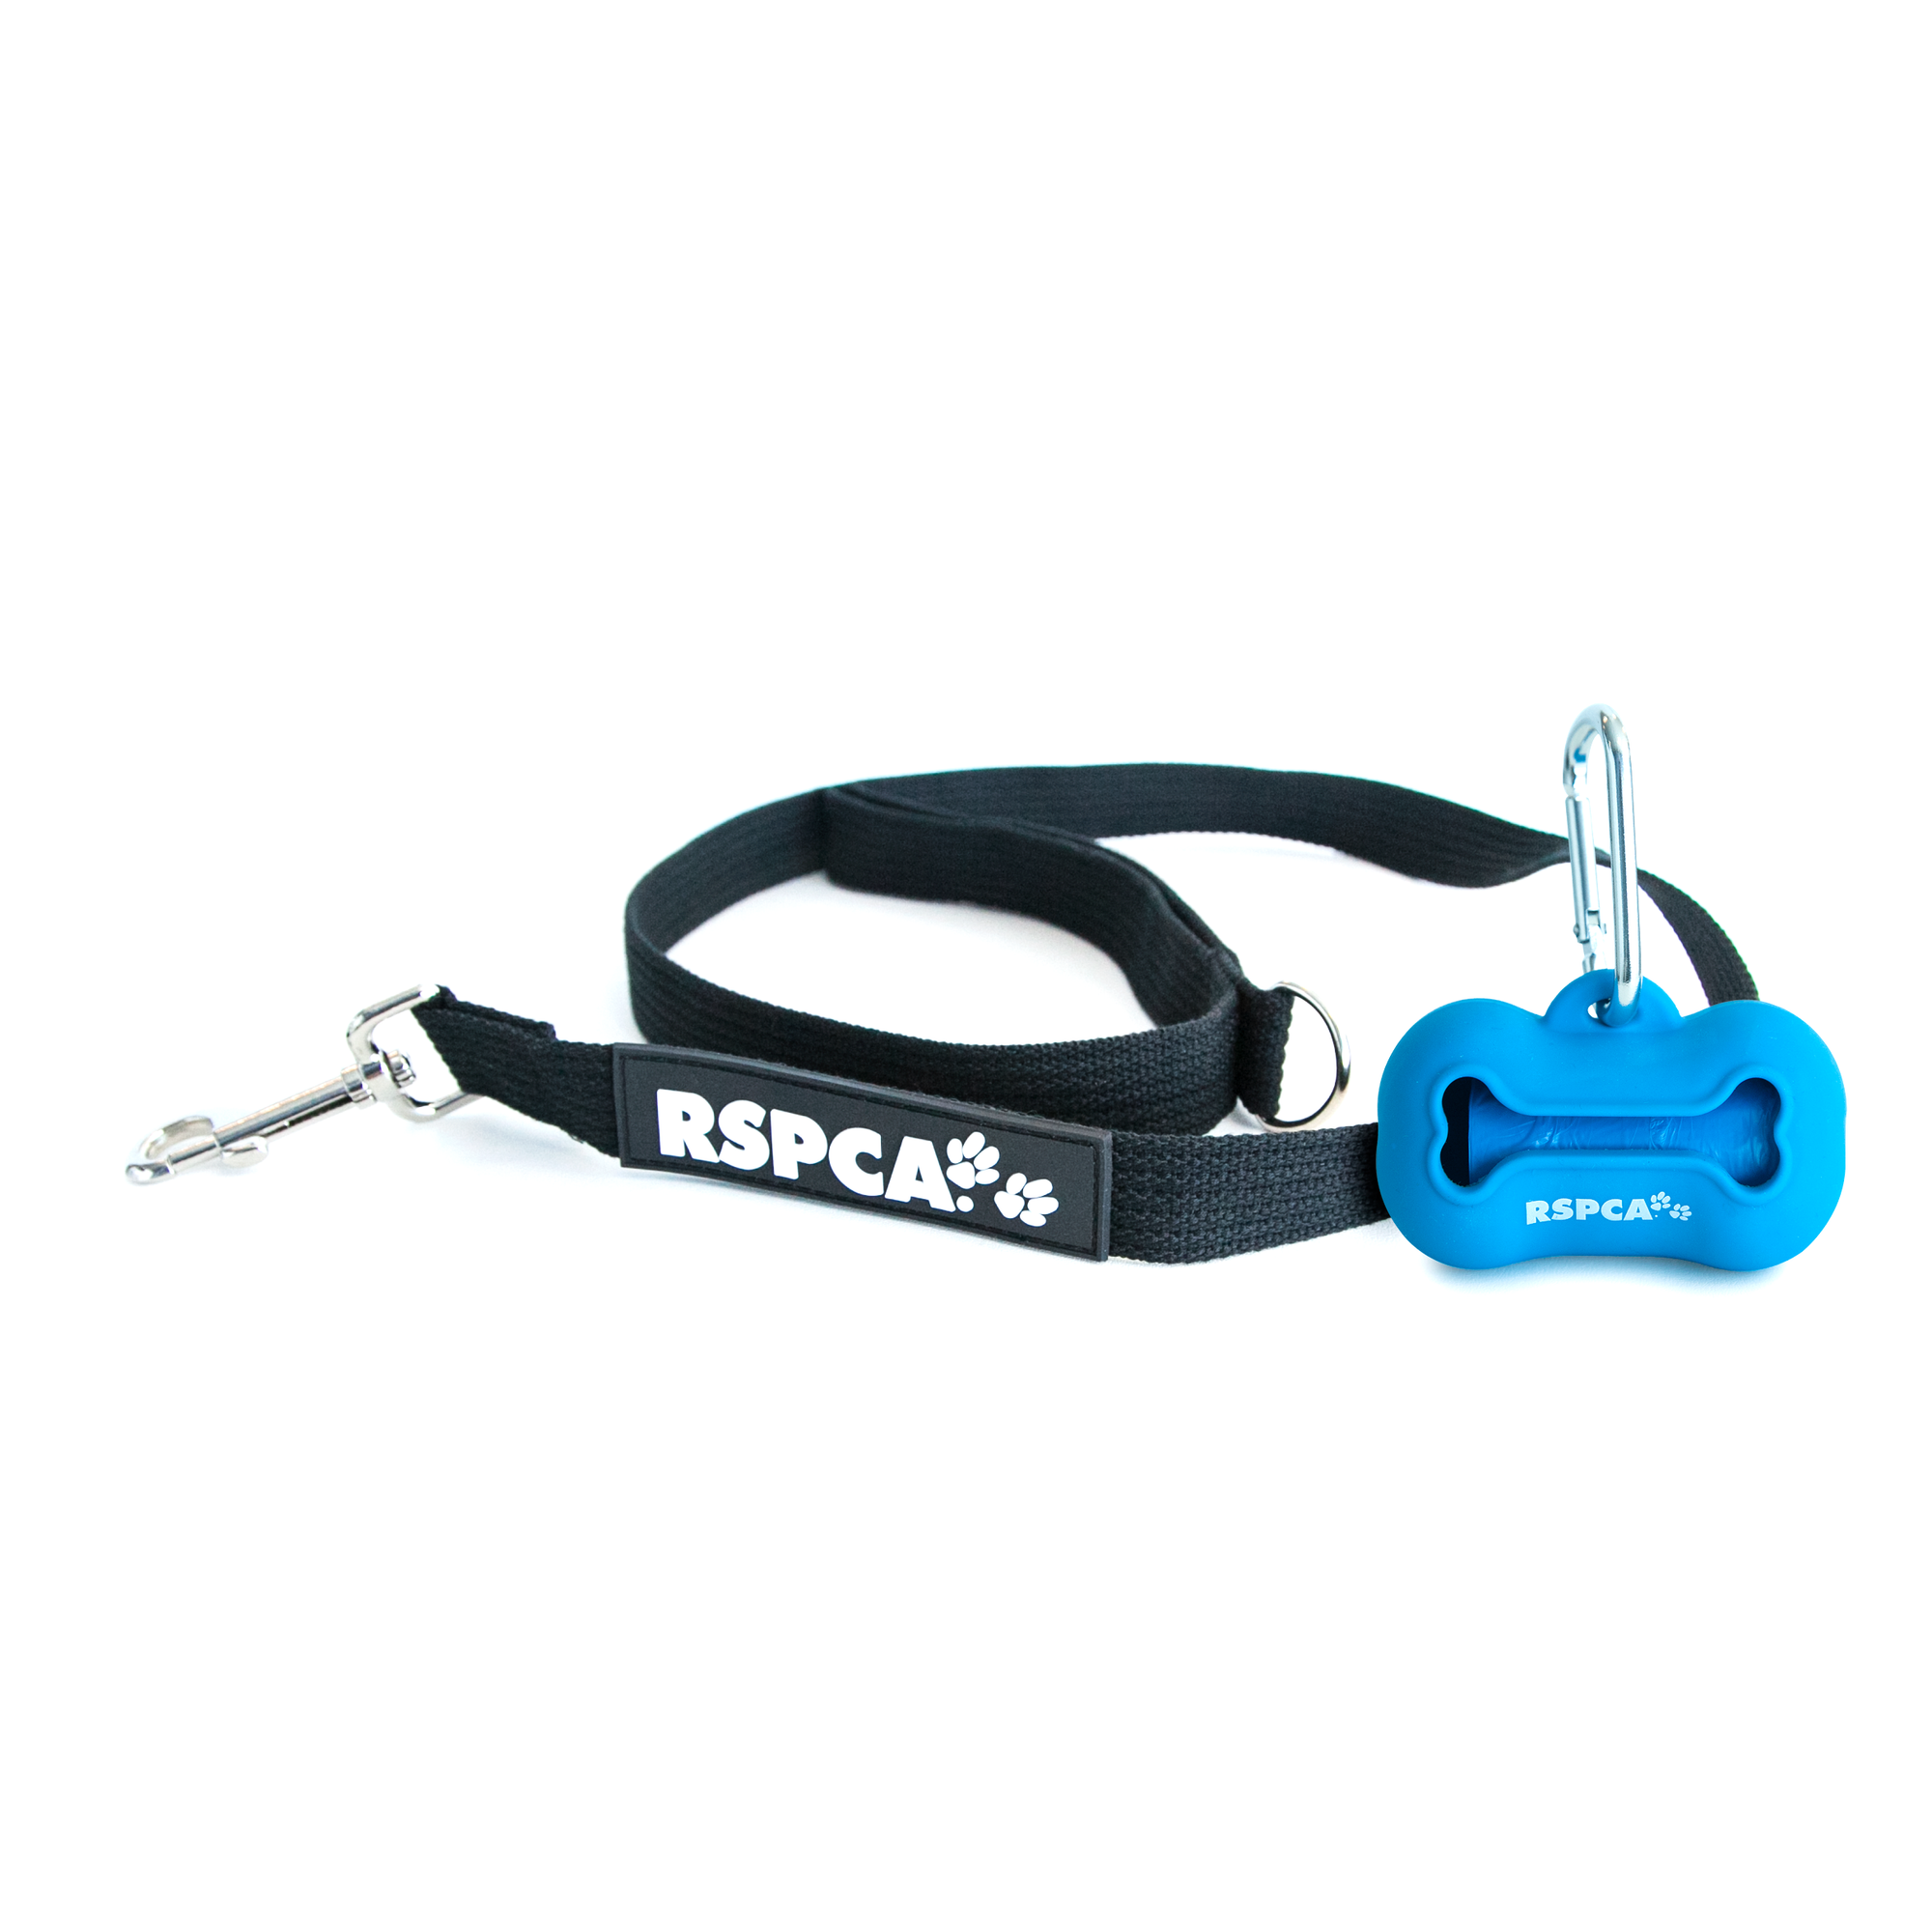 RSPCA Lead 120cm with Poo Bag Dispenser - RSPCA VIC